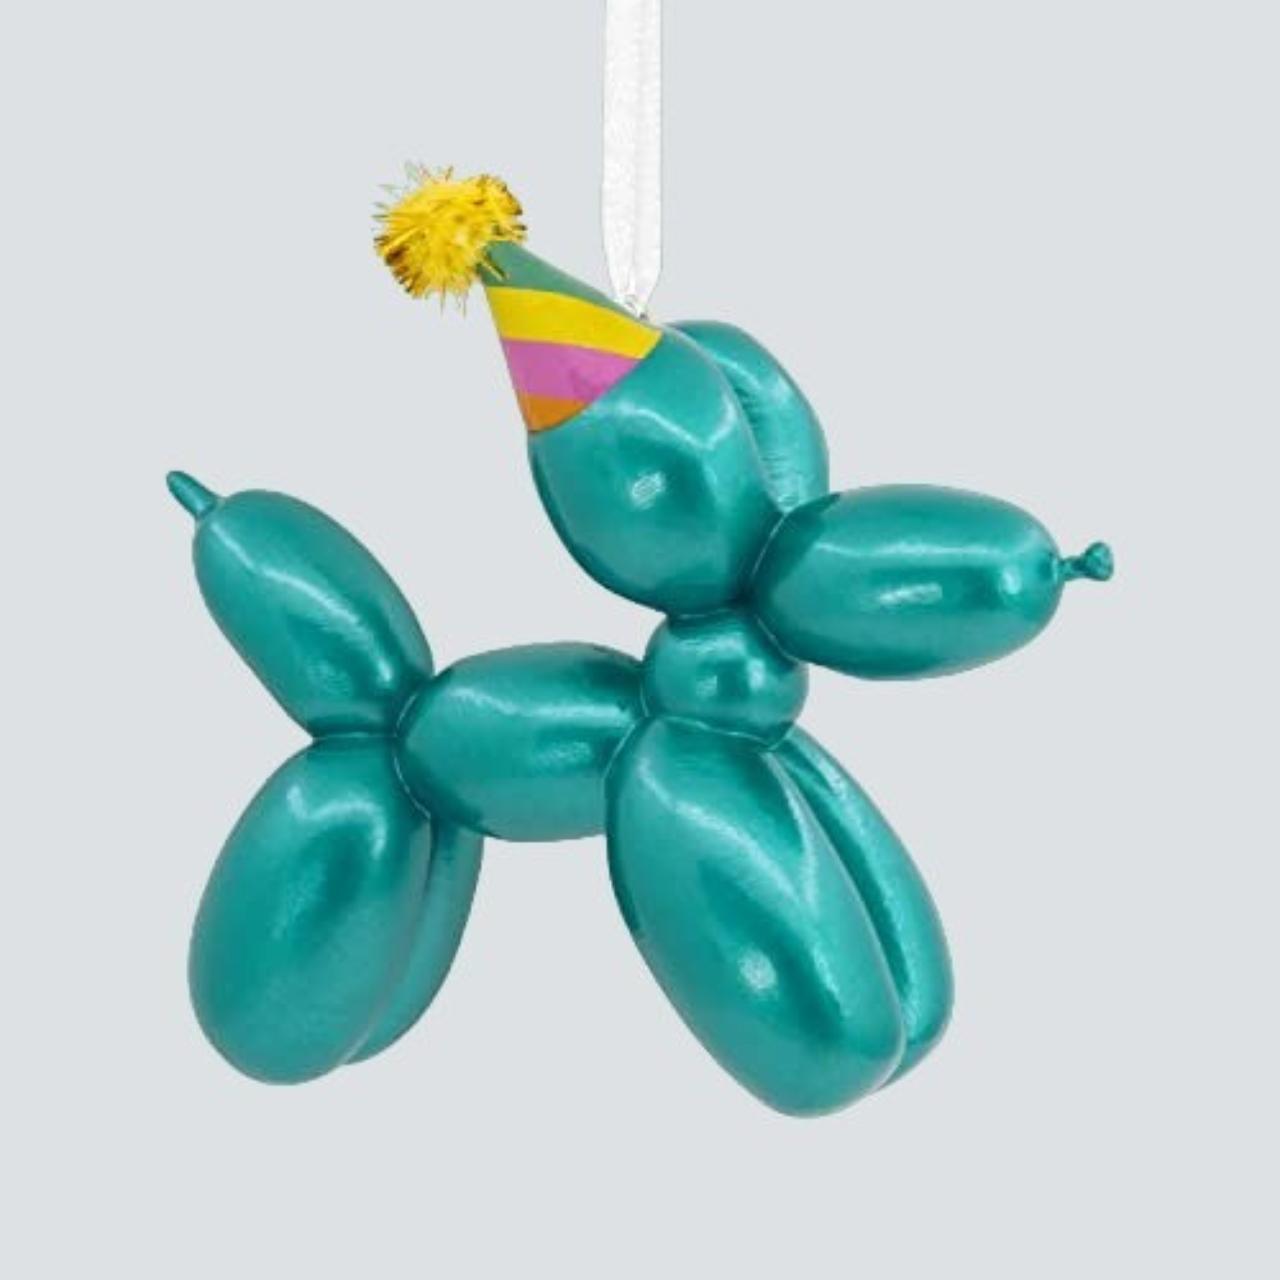 Sparkly/glittery balloon dog room decor - Depop